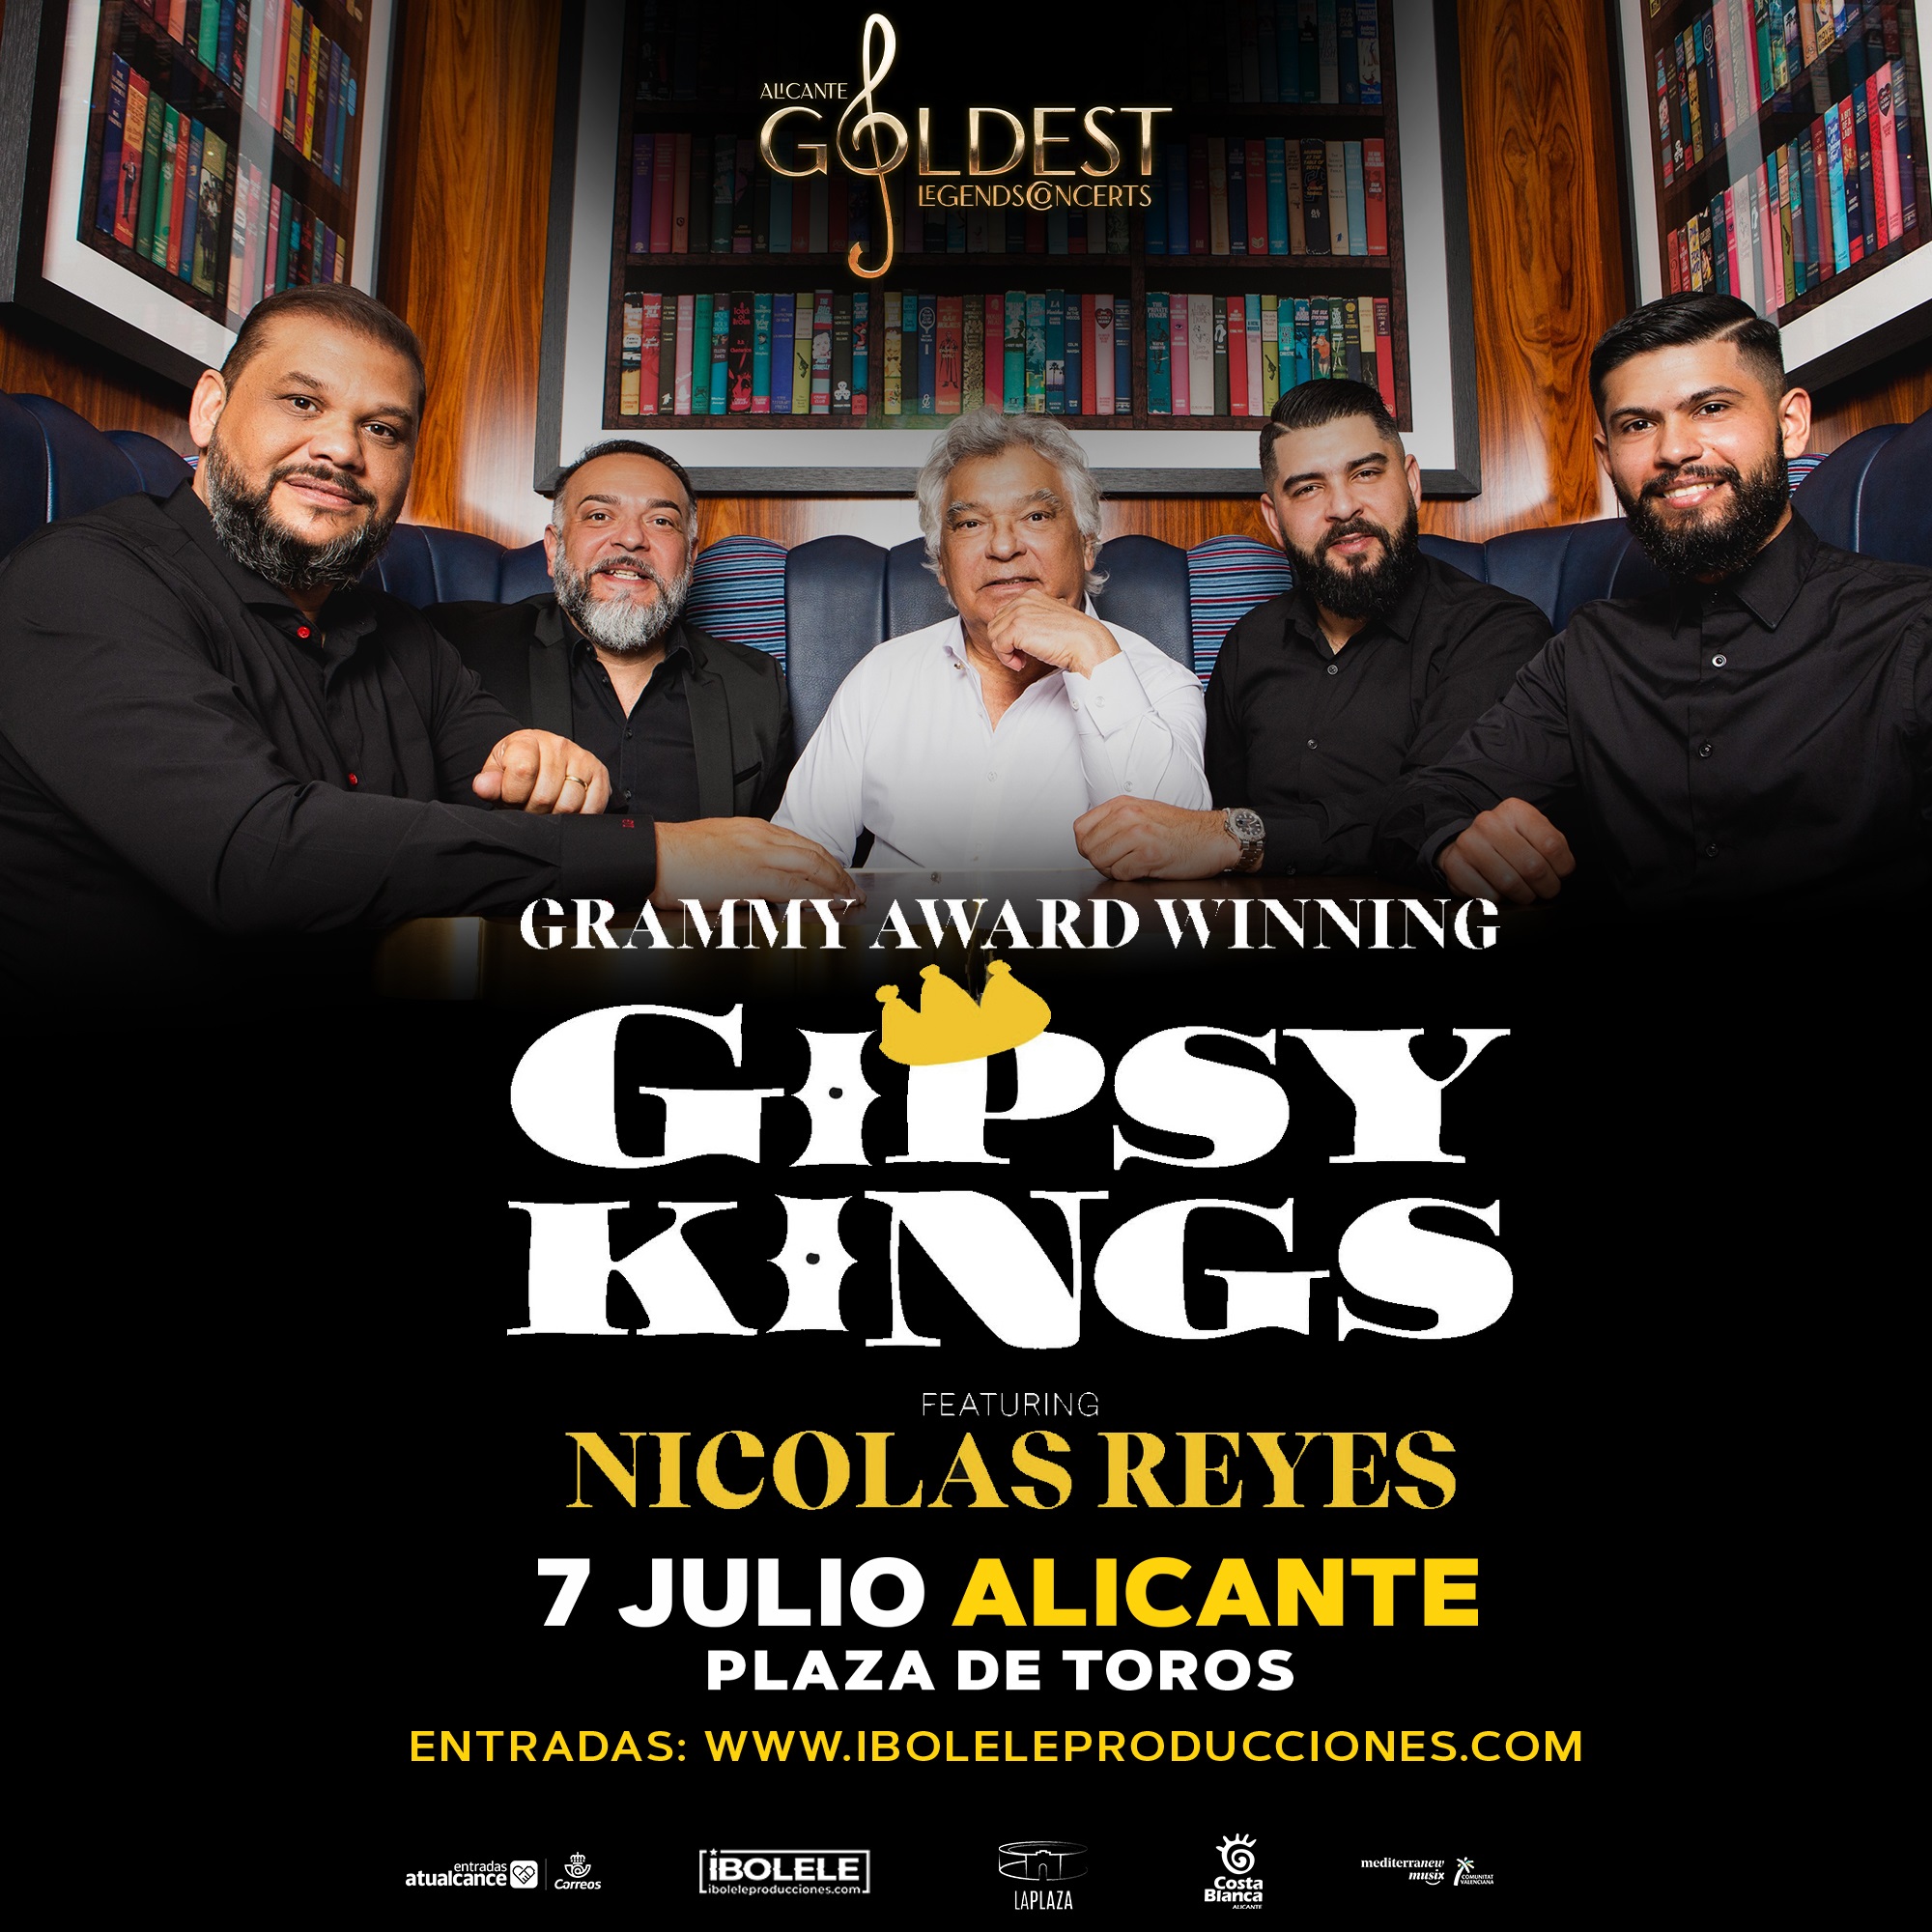 Gipsy Kings ft. Nicolas Reyes in Alicante